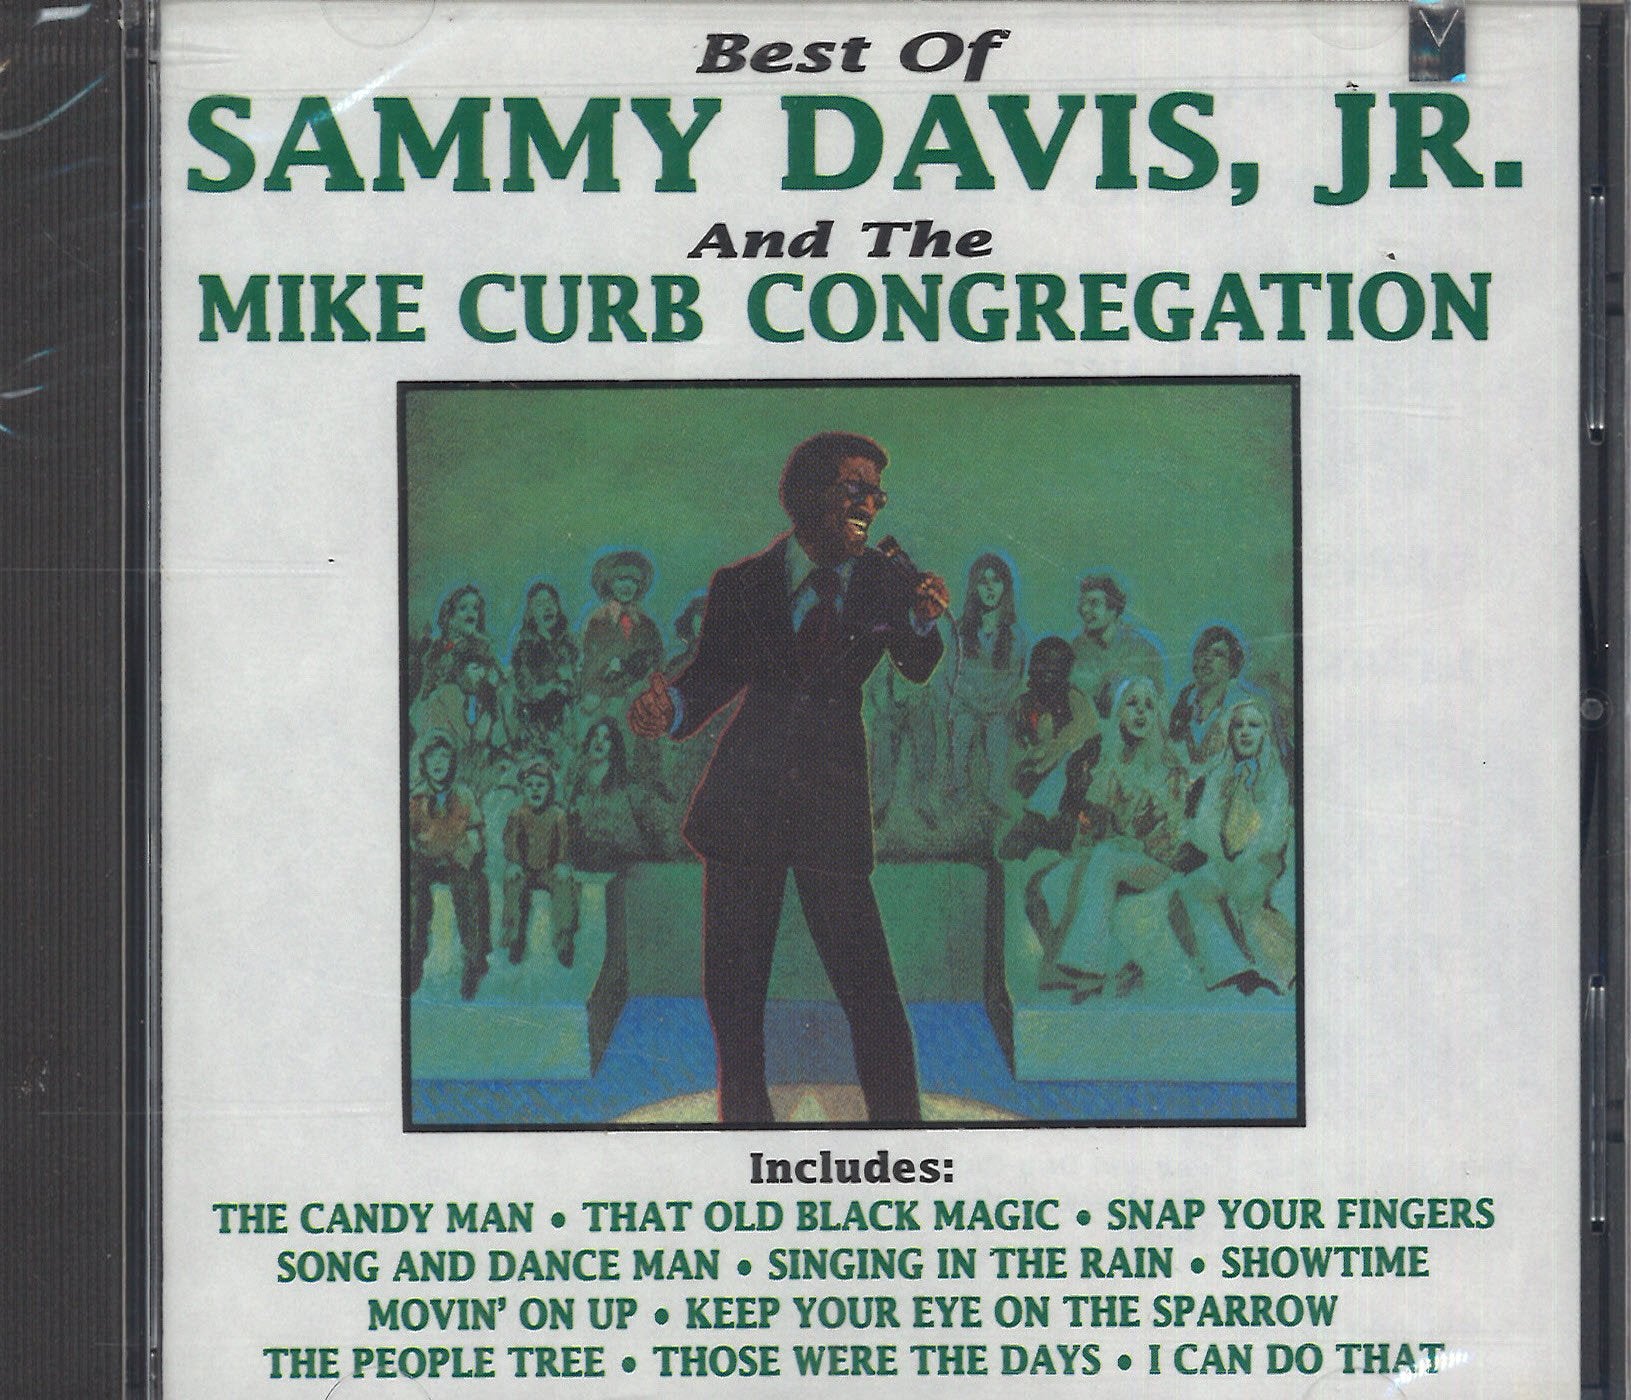 Sammy Davis Jr. & Mike Curb Congregation Best of Sammy Davis, Jr. And The Mike Curb Congregation